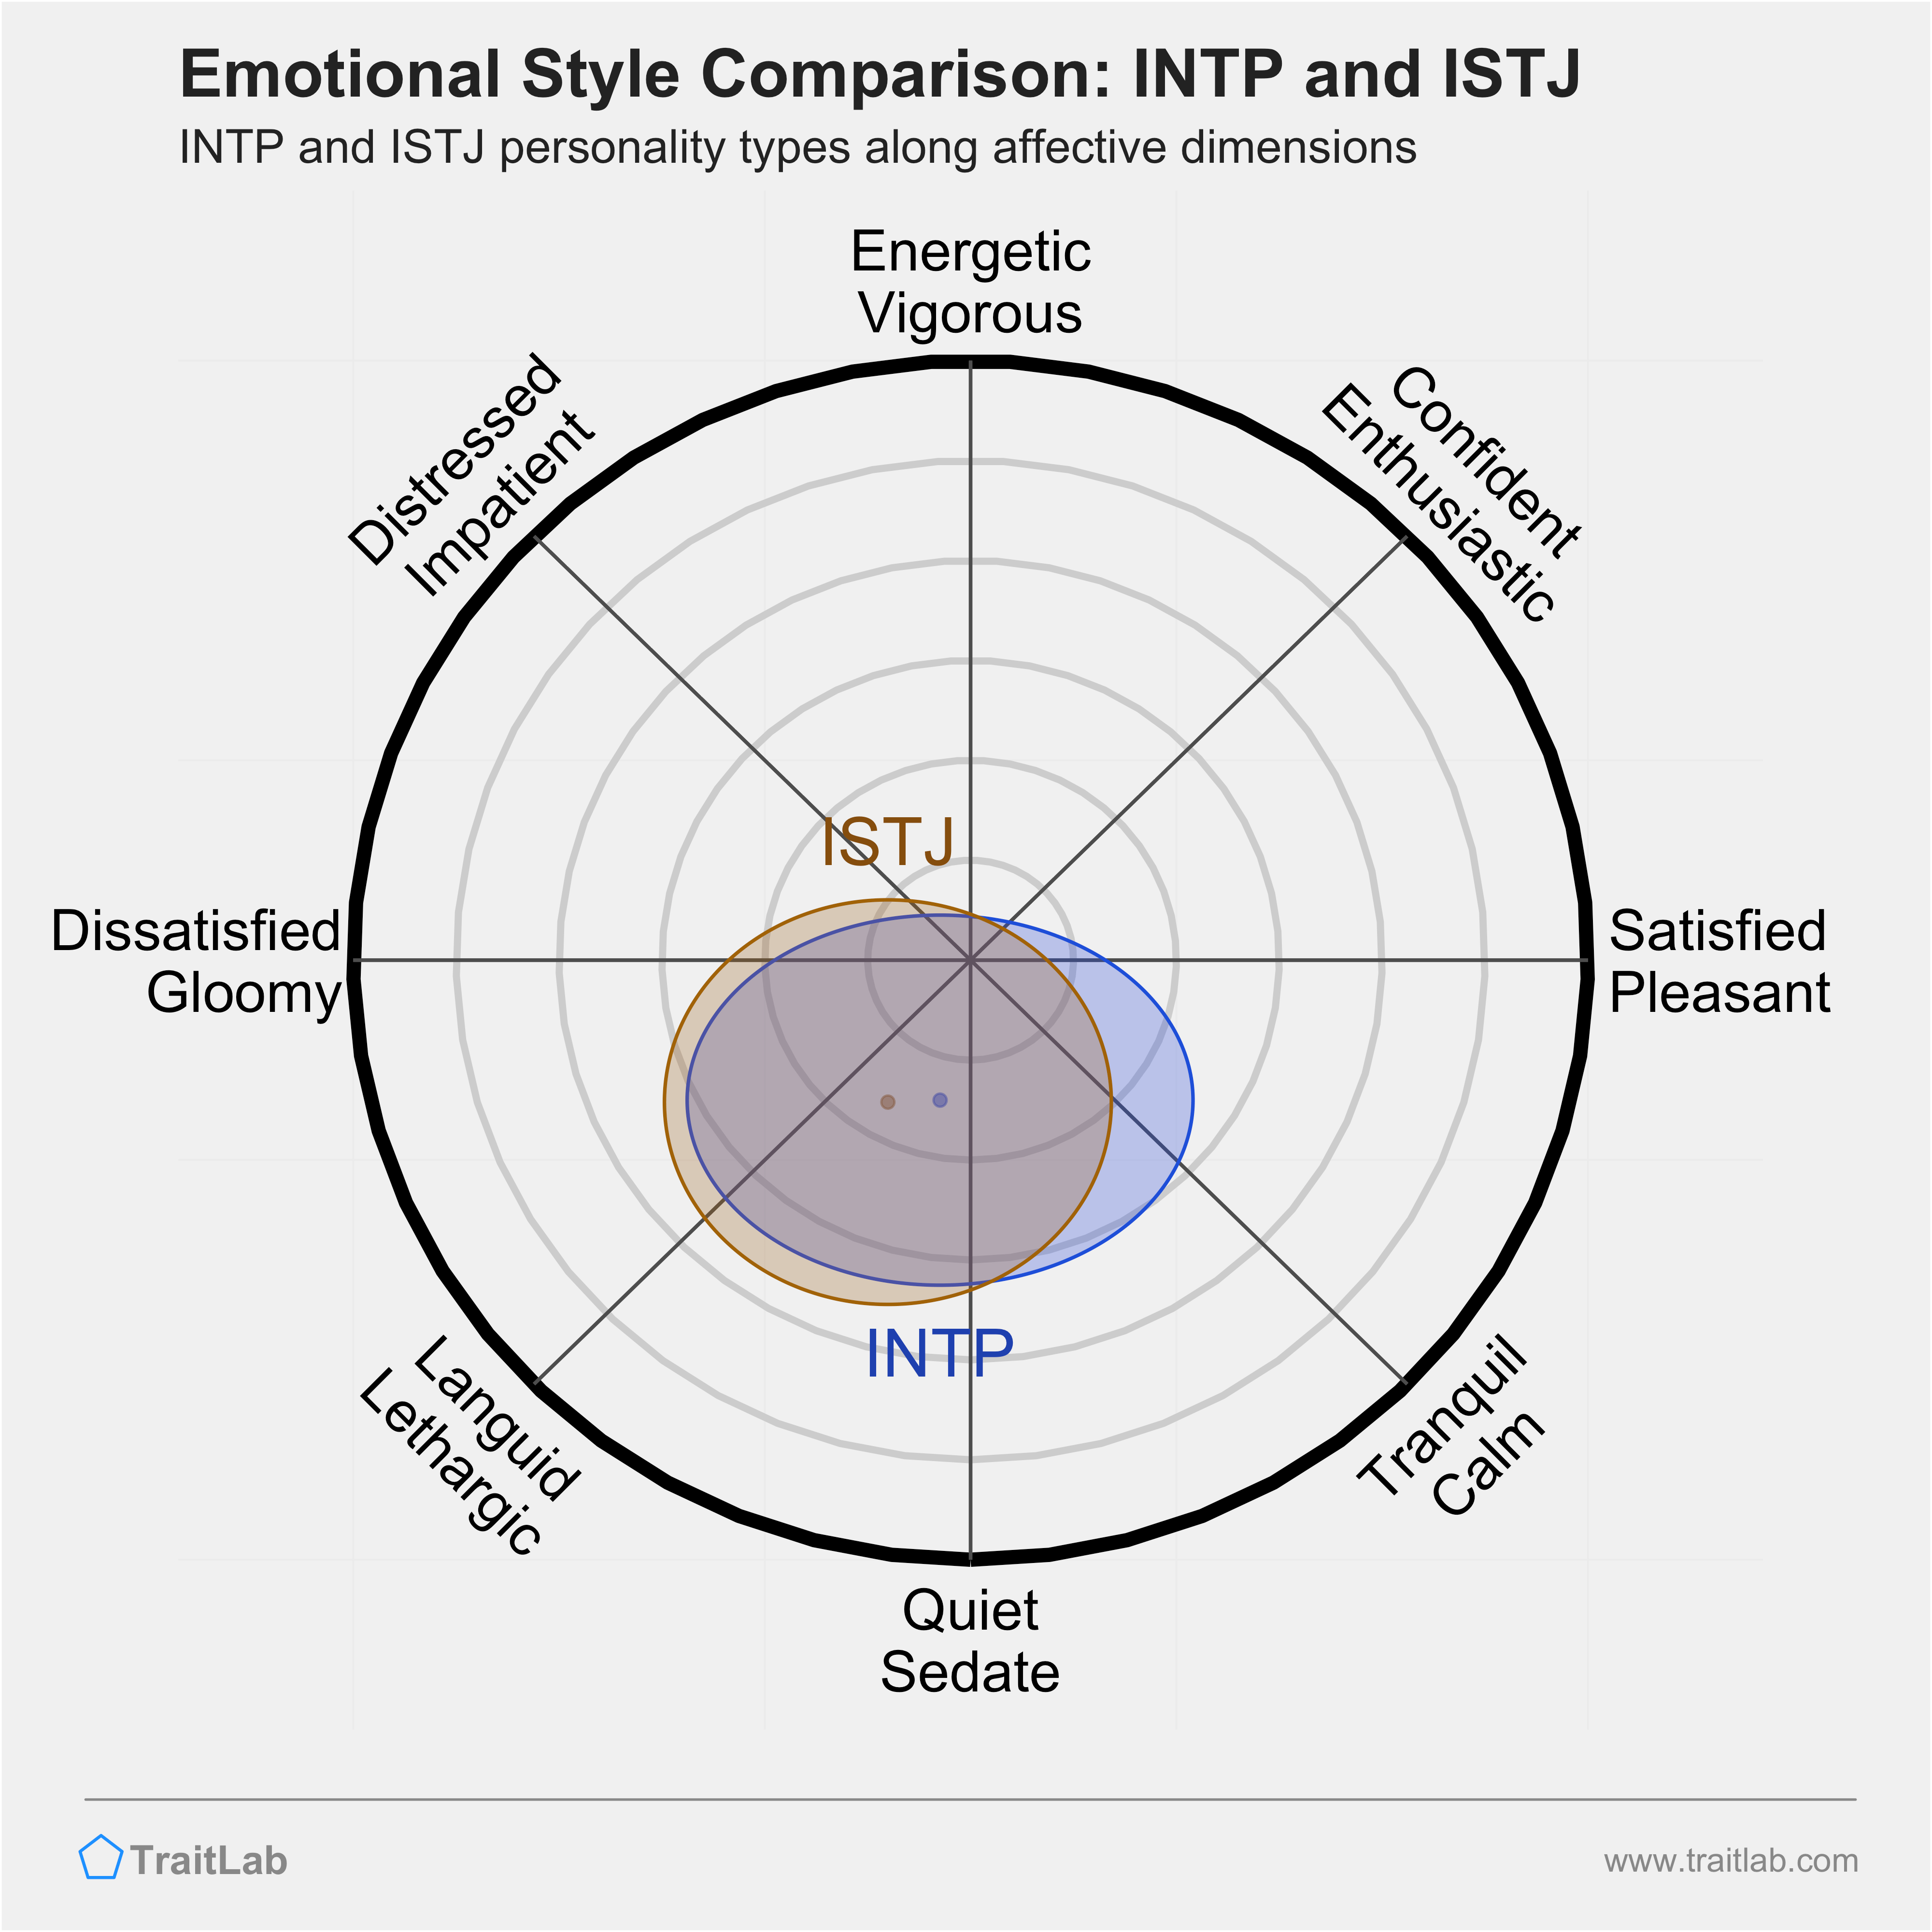 INTP and ISTJ comparison across emotional (affective) dimensions